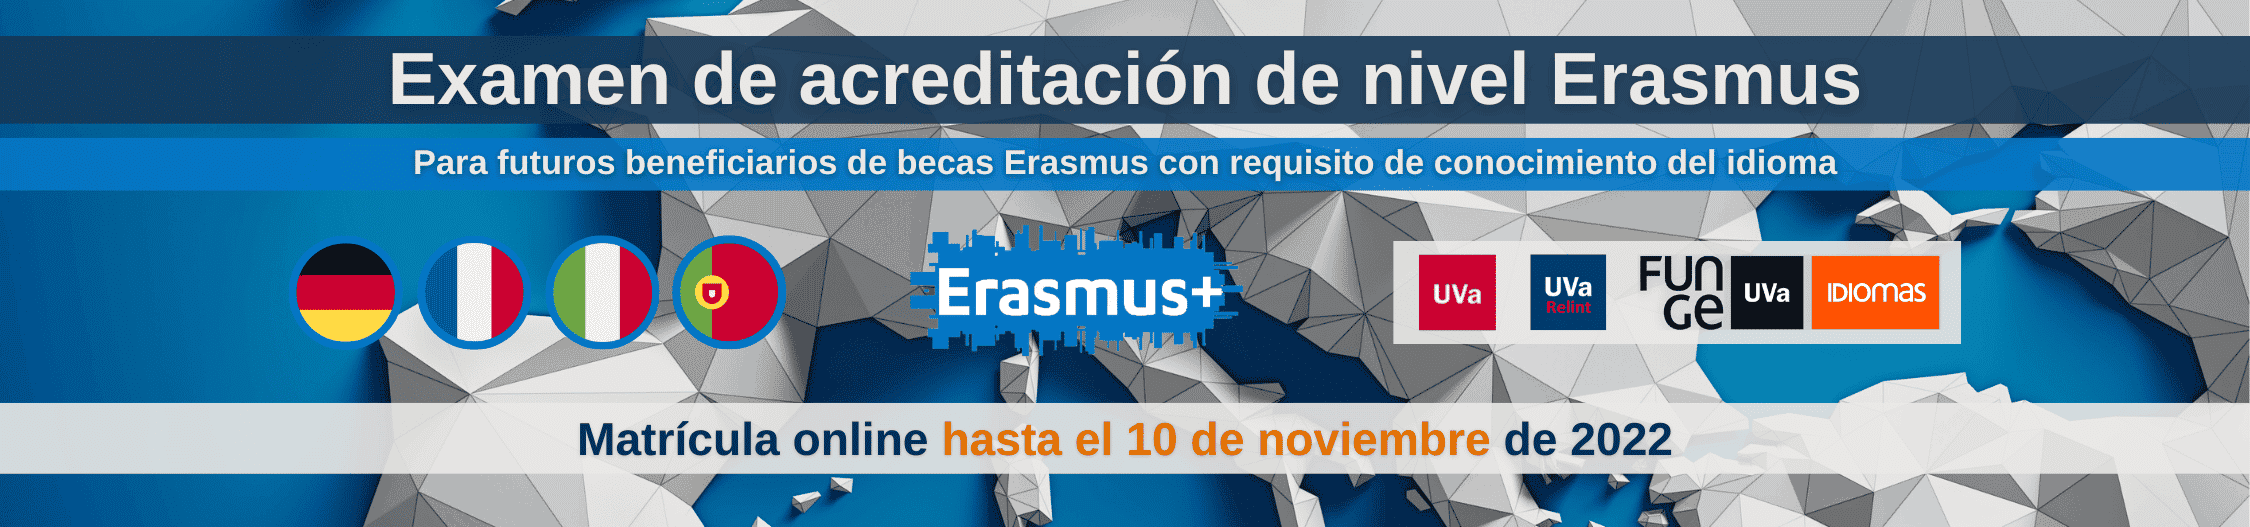 Banner examen acreditacion Erasmus Idiomas UVa noviembre 2022